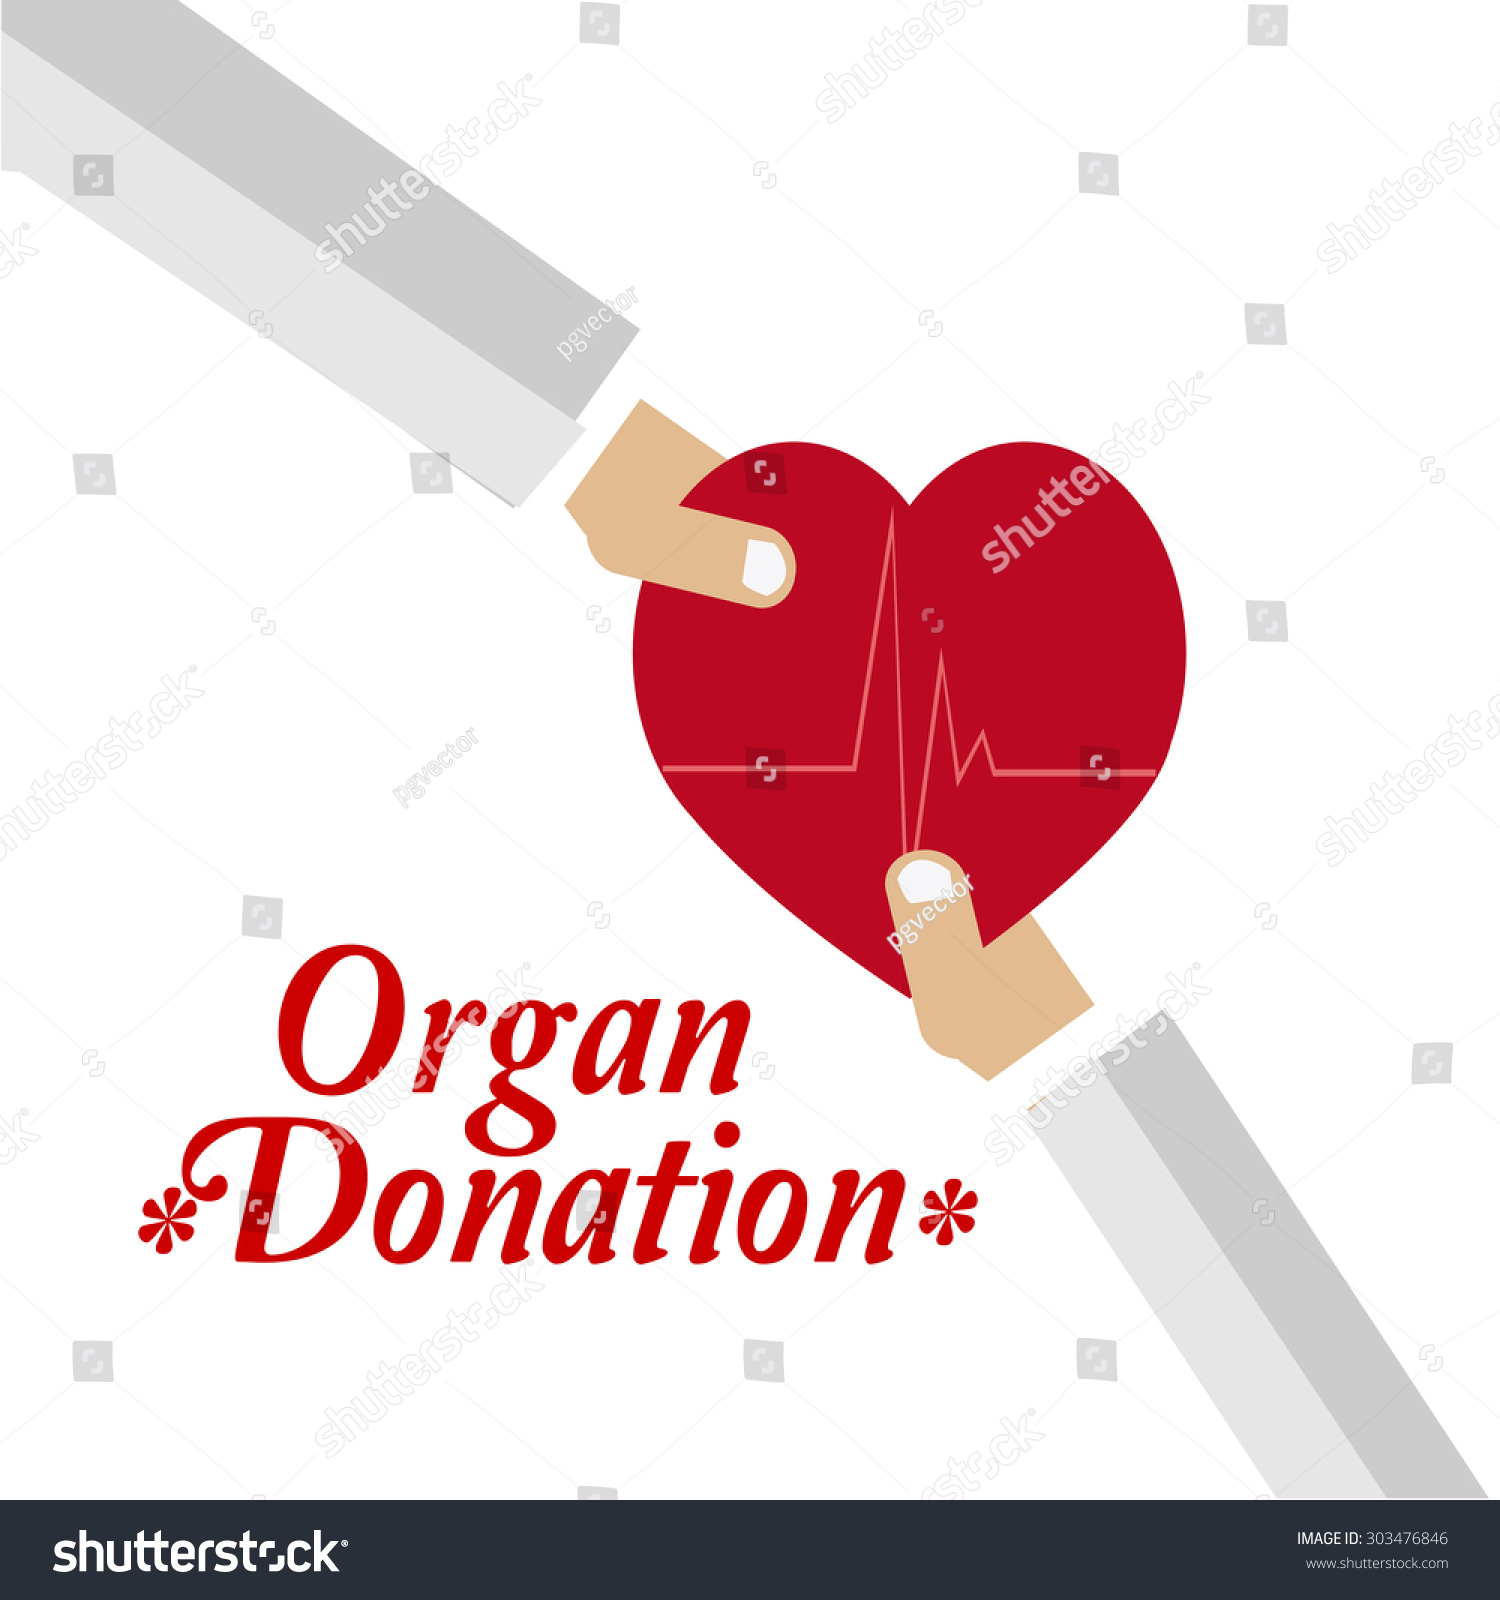 organ transplant clipart - photo #14